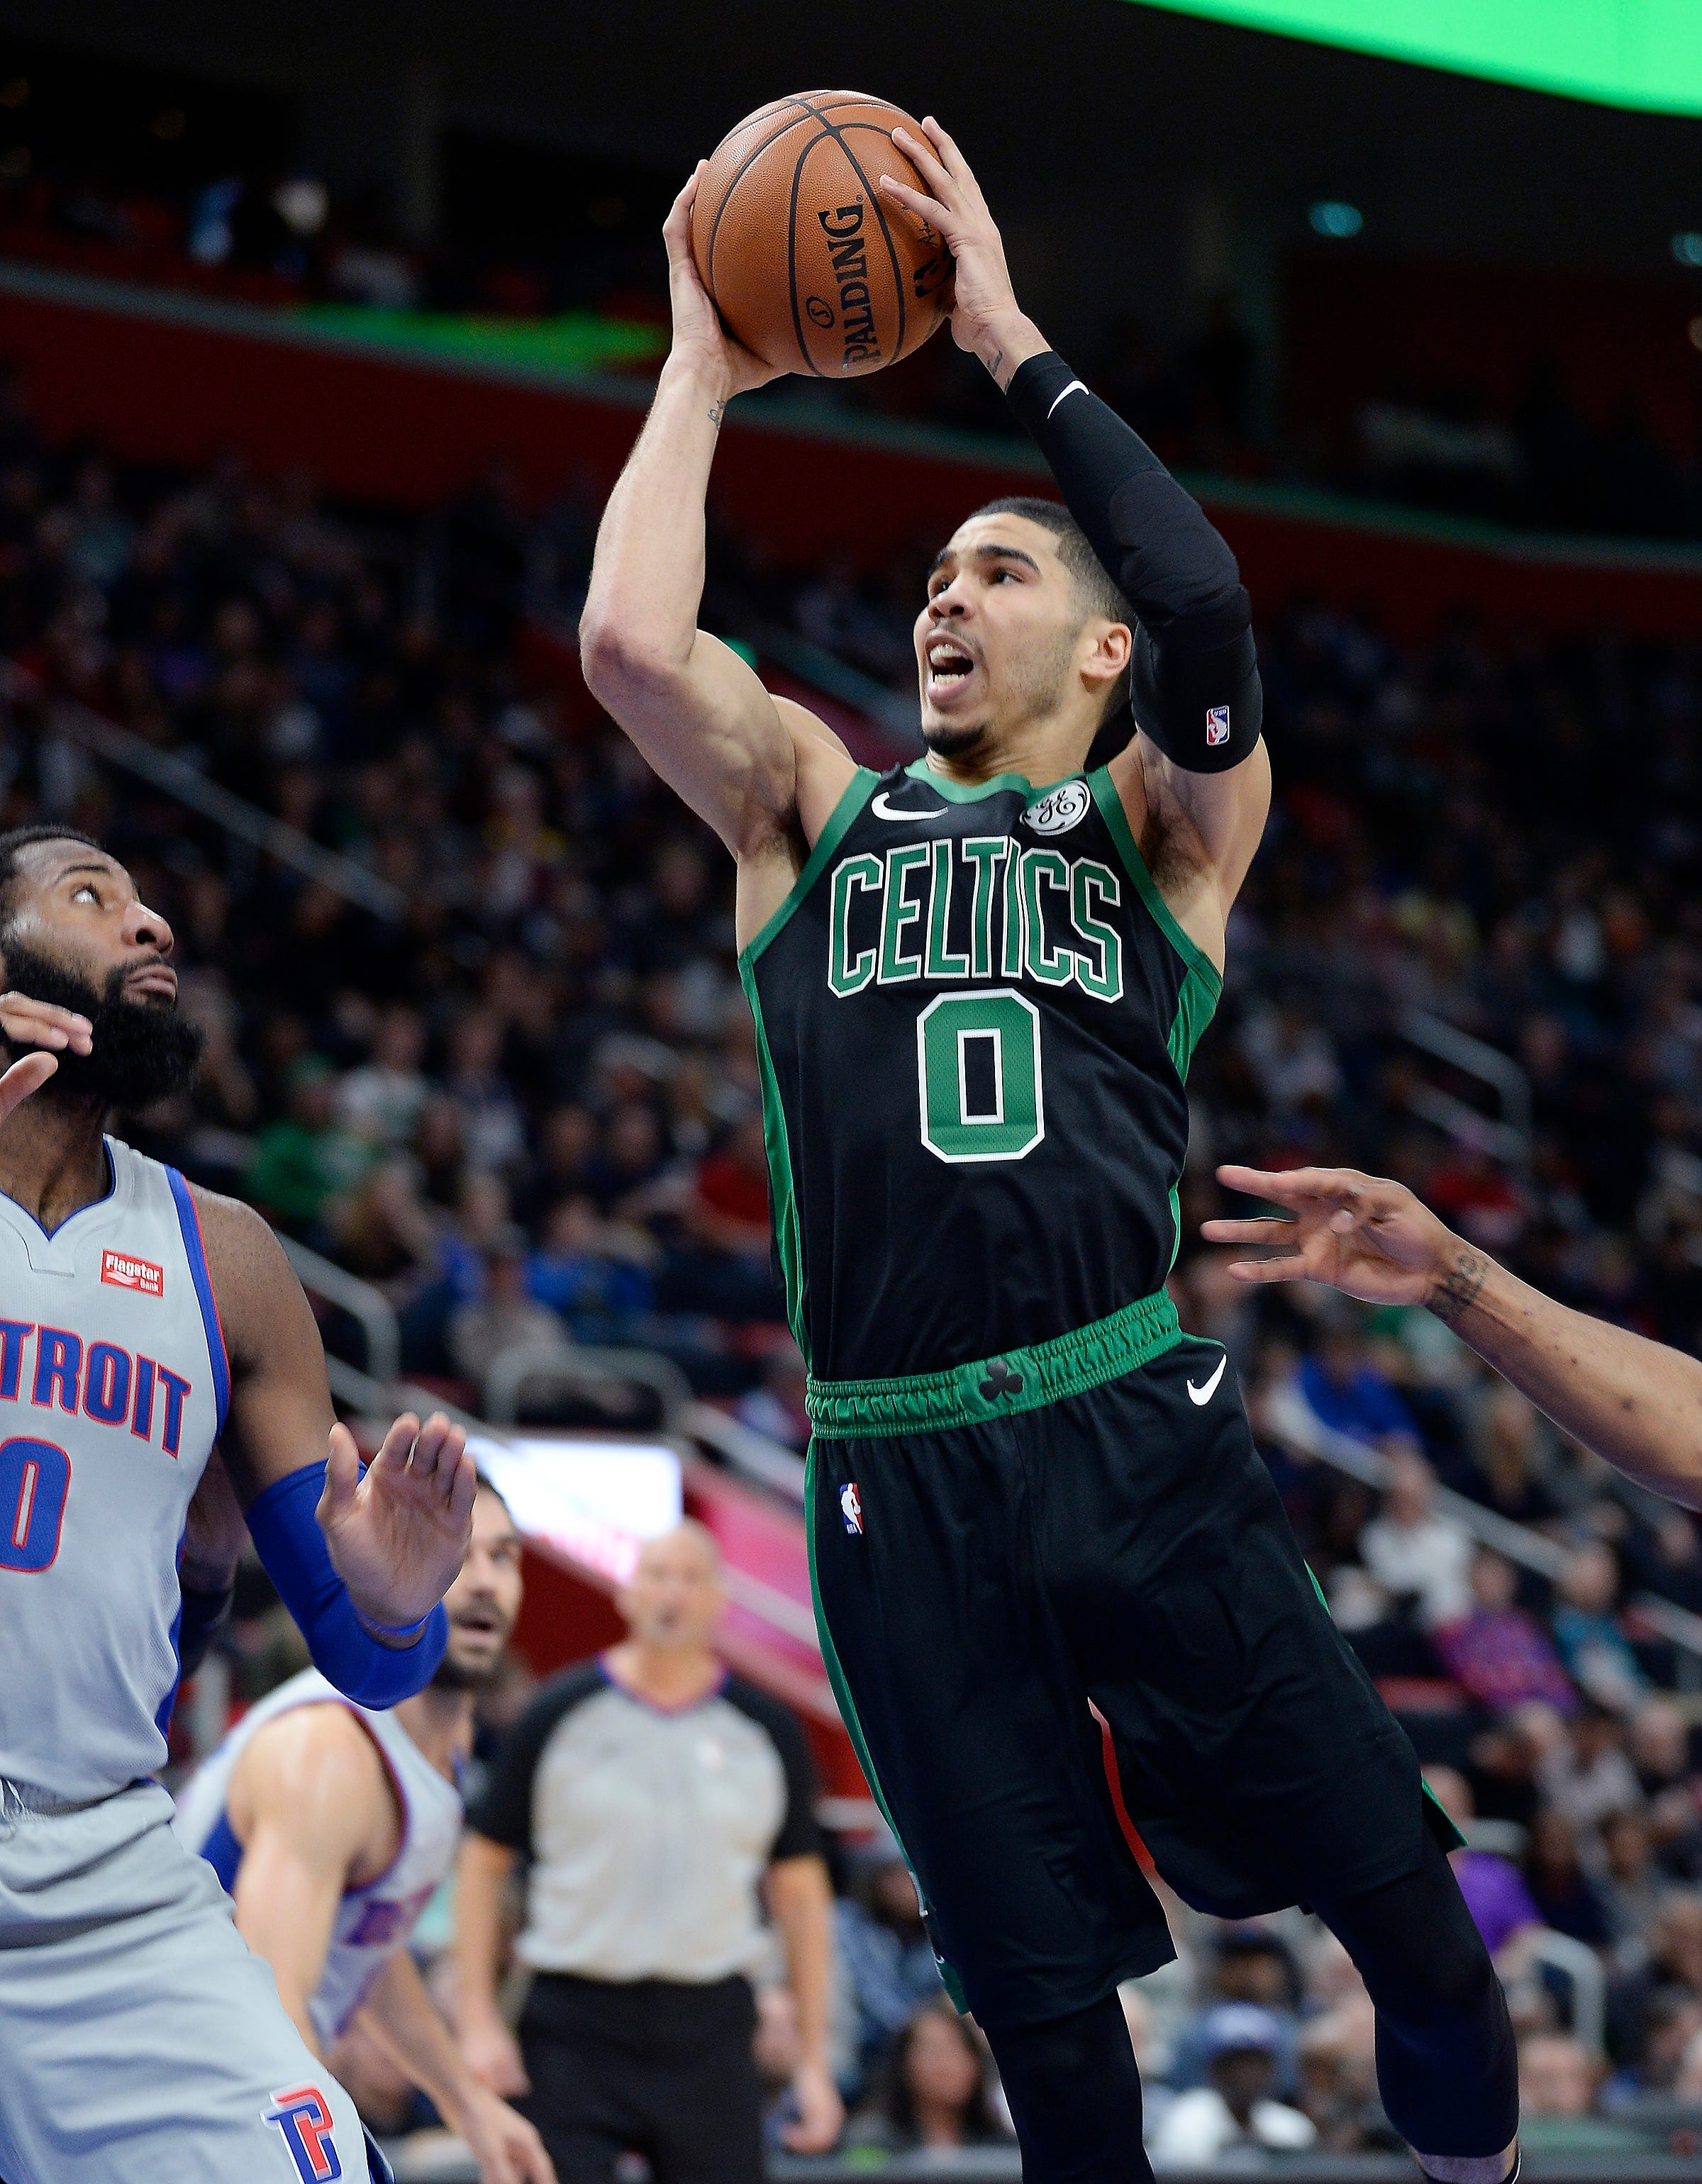 Celtics' Jayson Tatum shoots over Pistons' Andre Drummond in the second quarter.